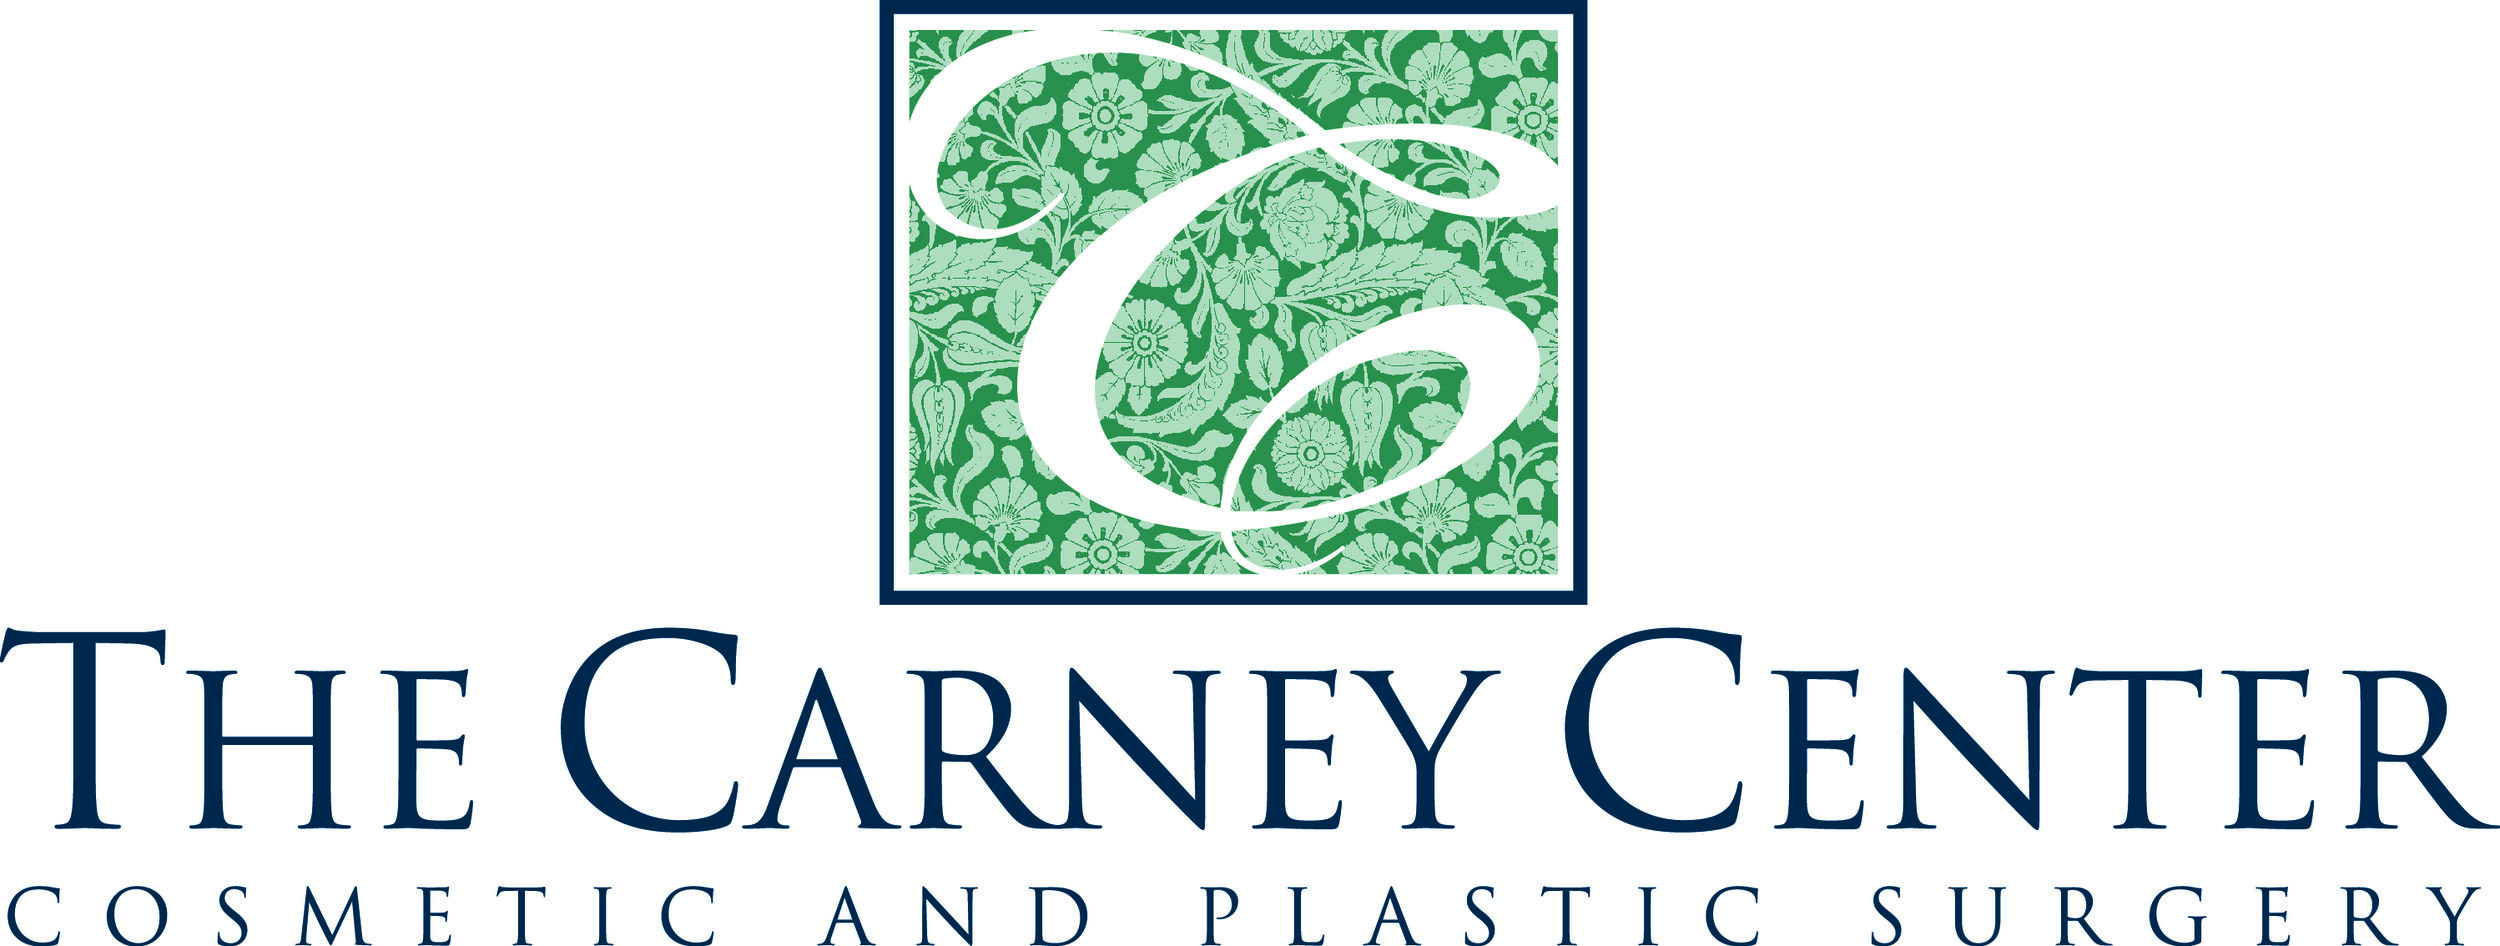 Carney Logo 2c FH - Copy.jpg